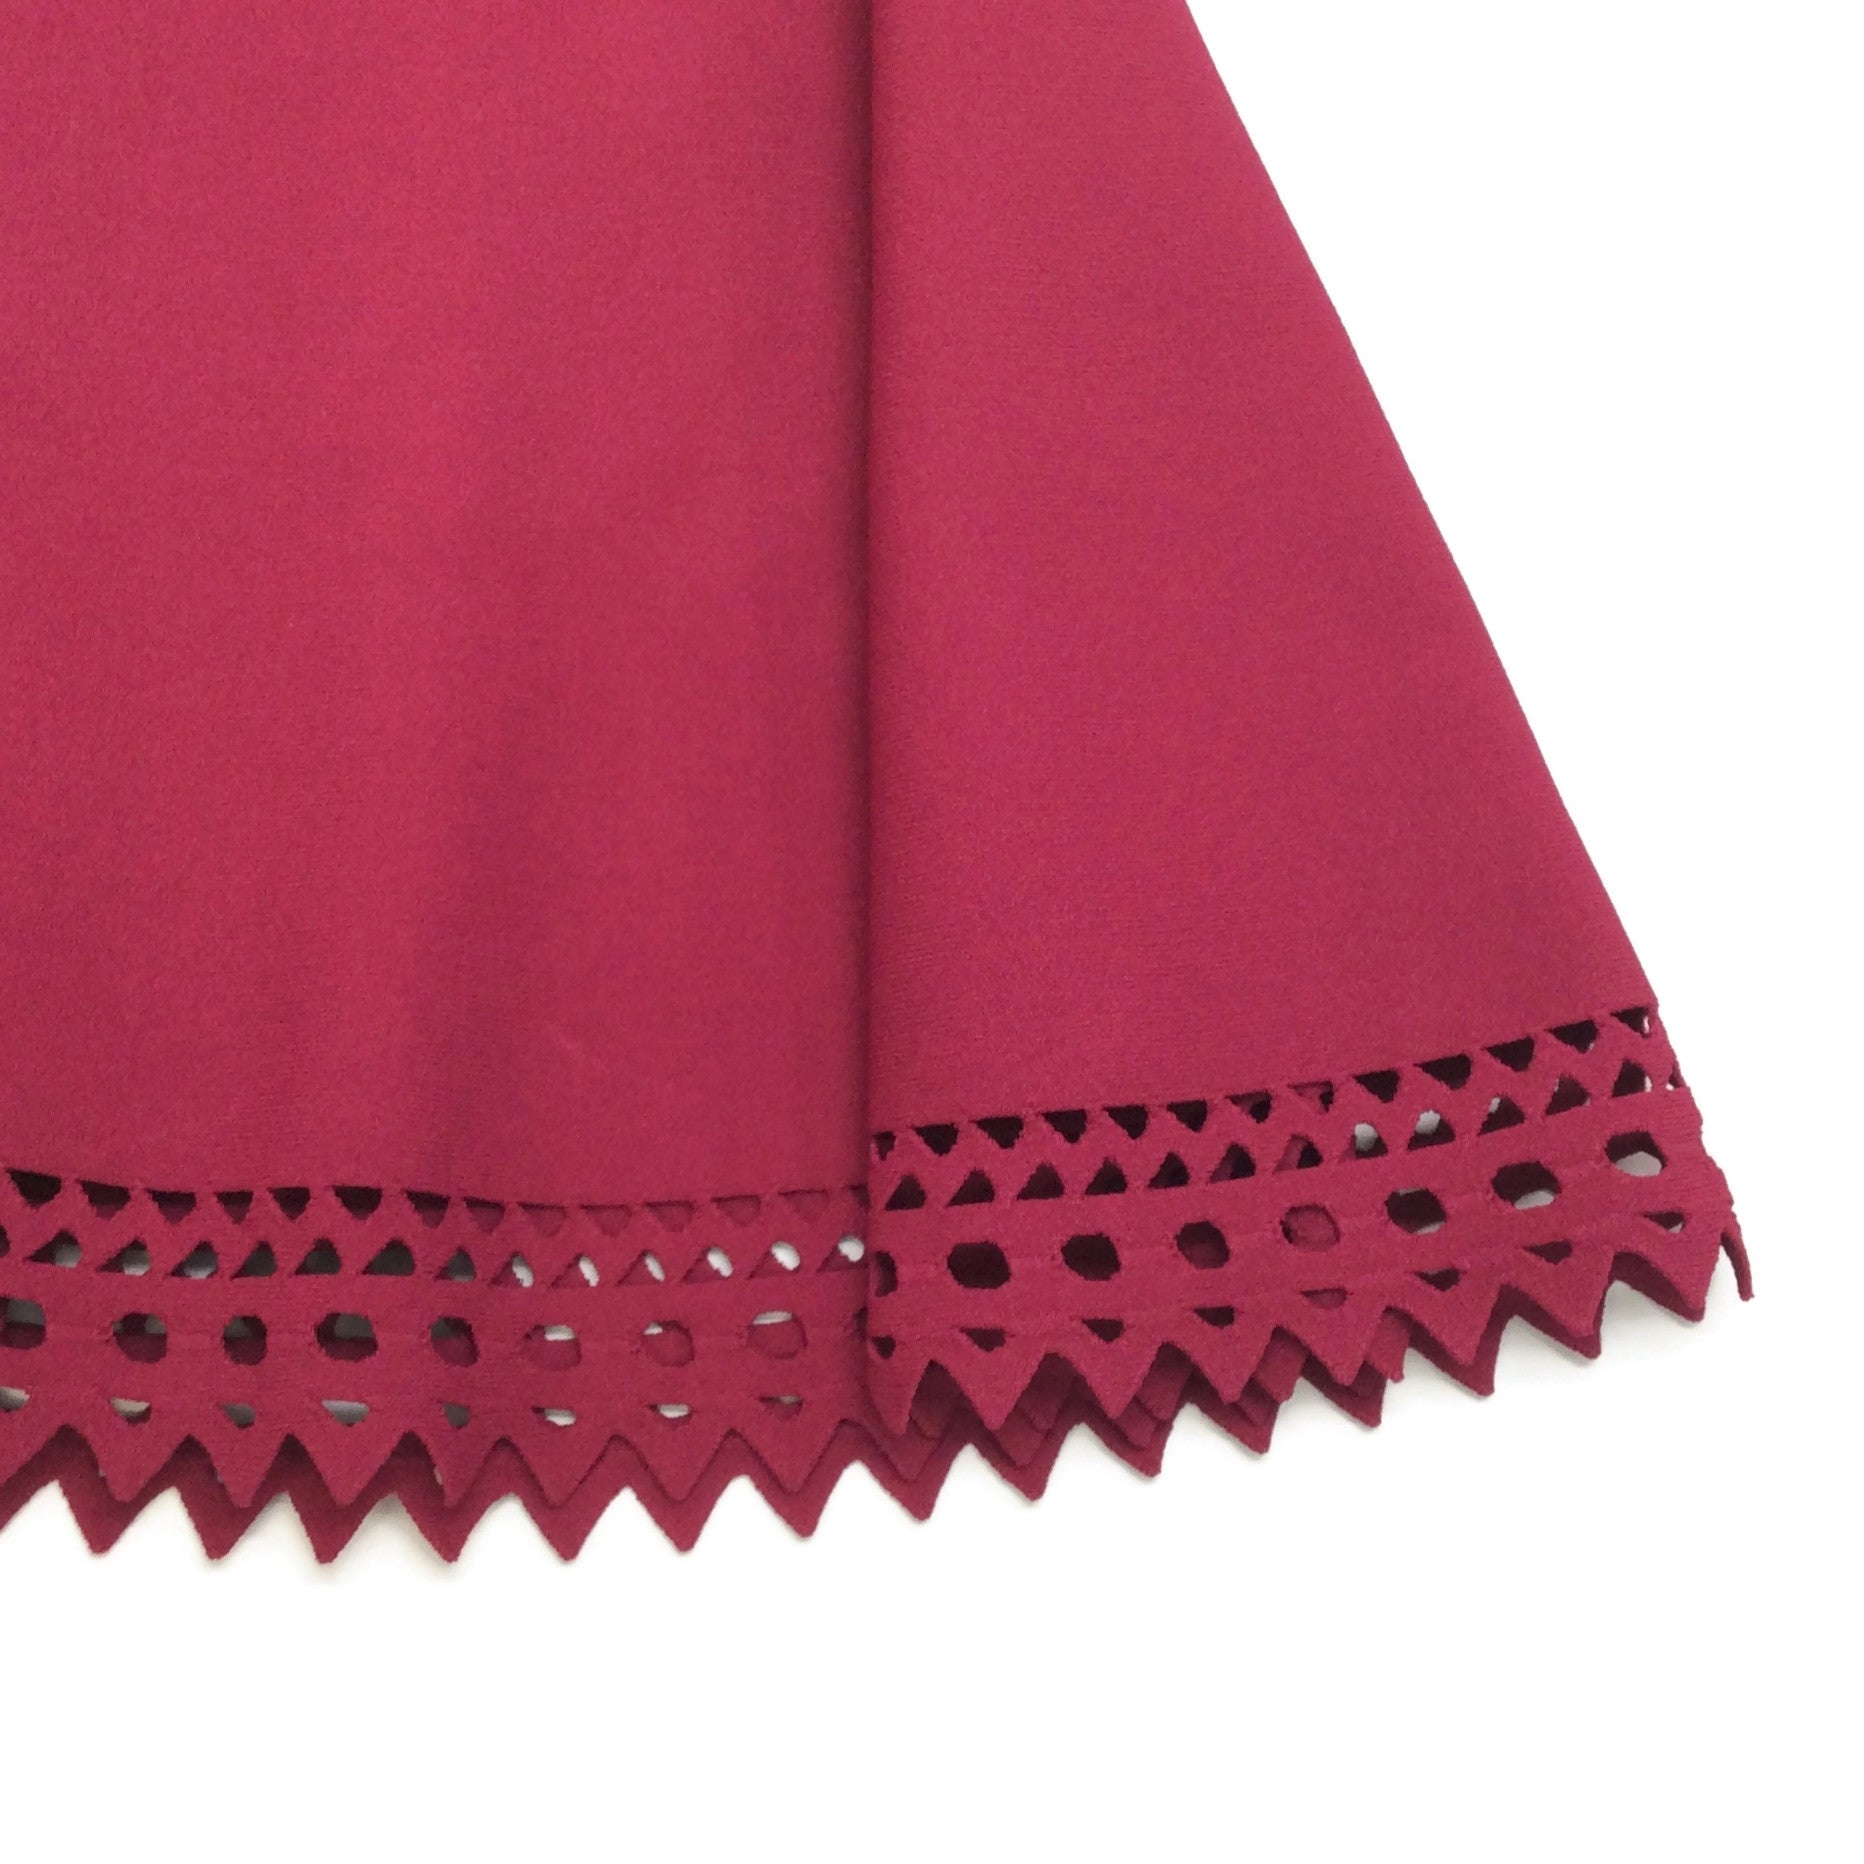 ALAÏA Raspberry Sleeveless with Cut Out Hem  Dress